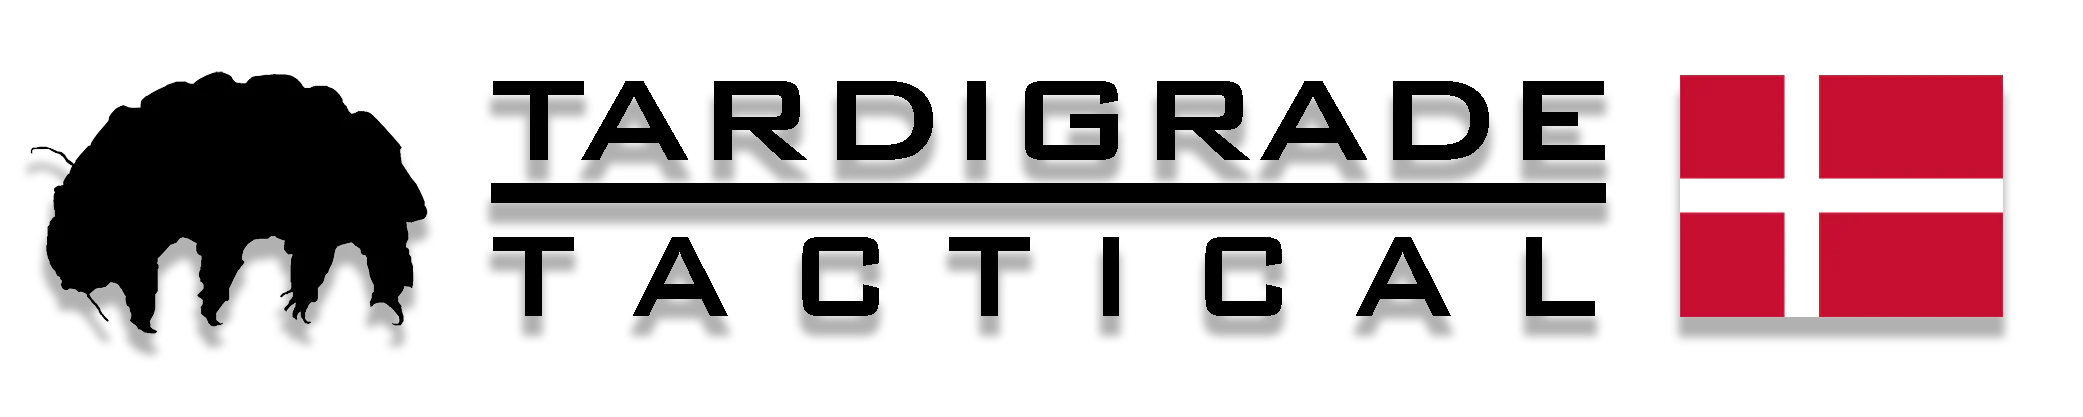 tardigrade logo